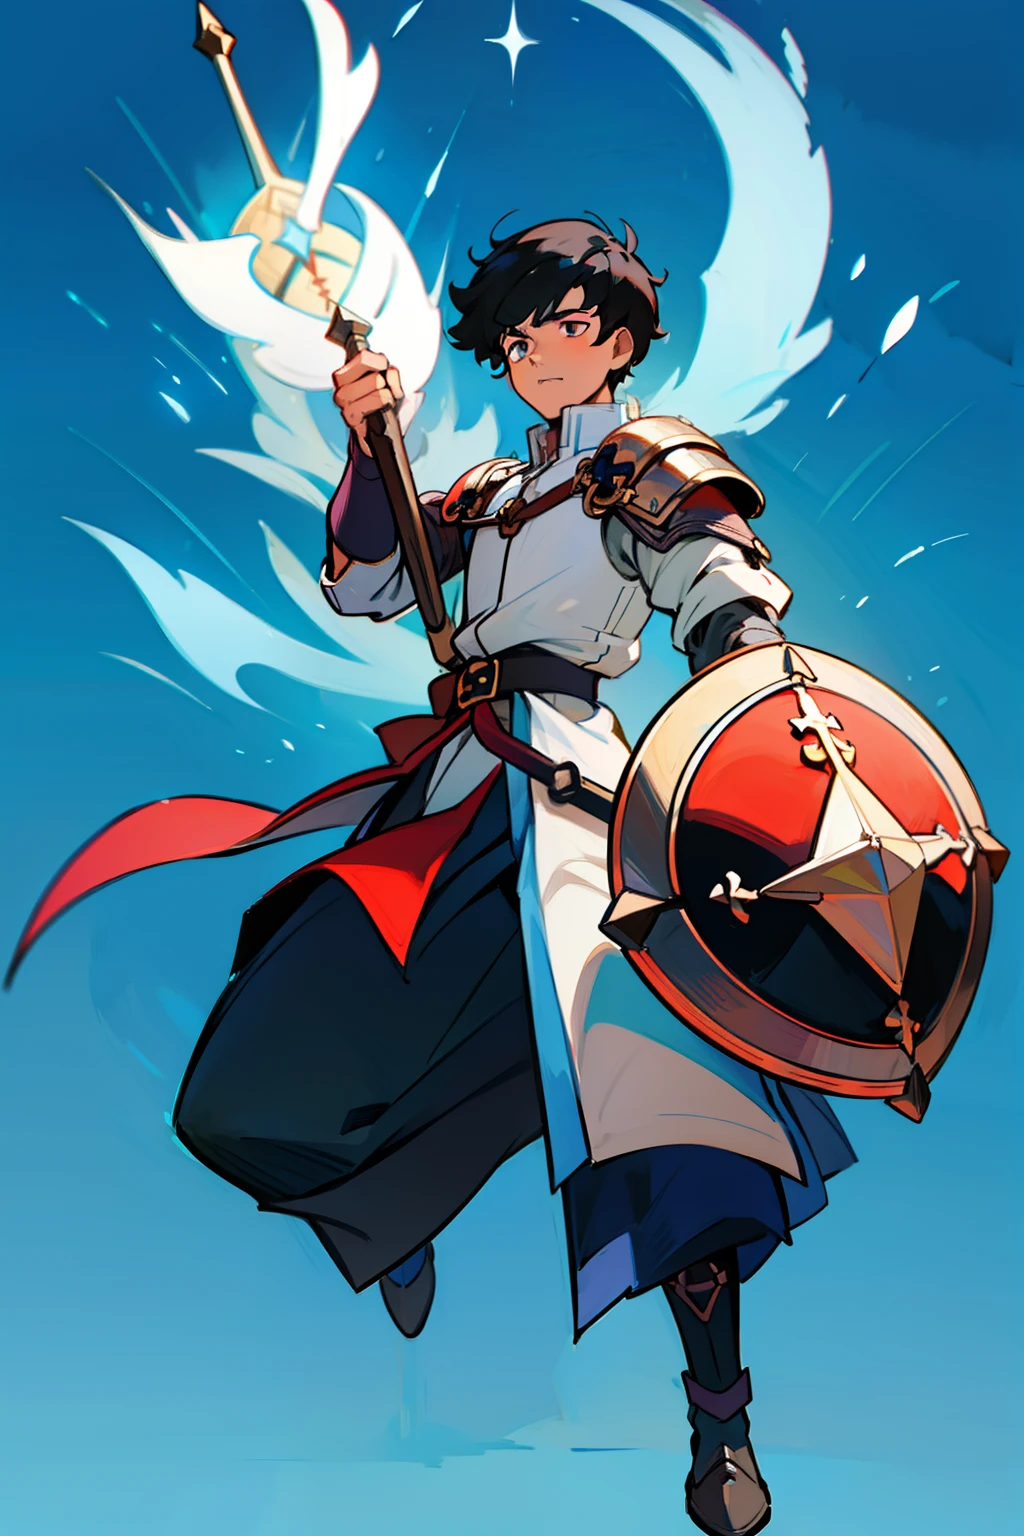 Isekai Light Novel The Great Cleric Gets Anime Adaptation